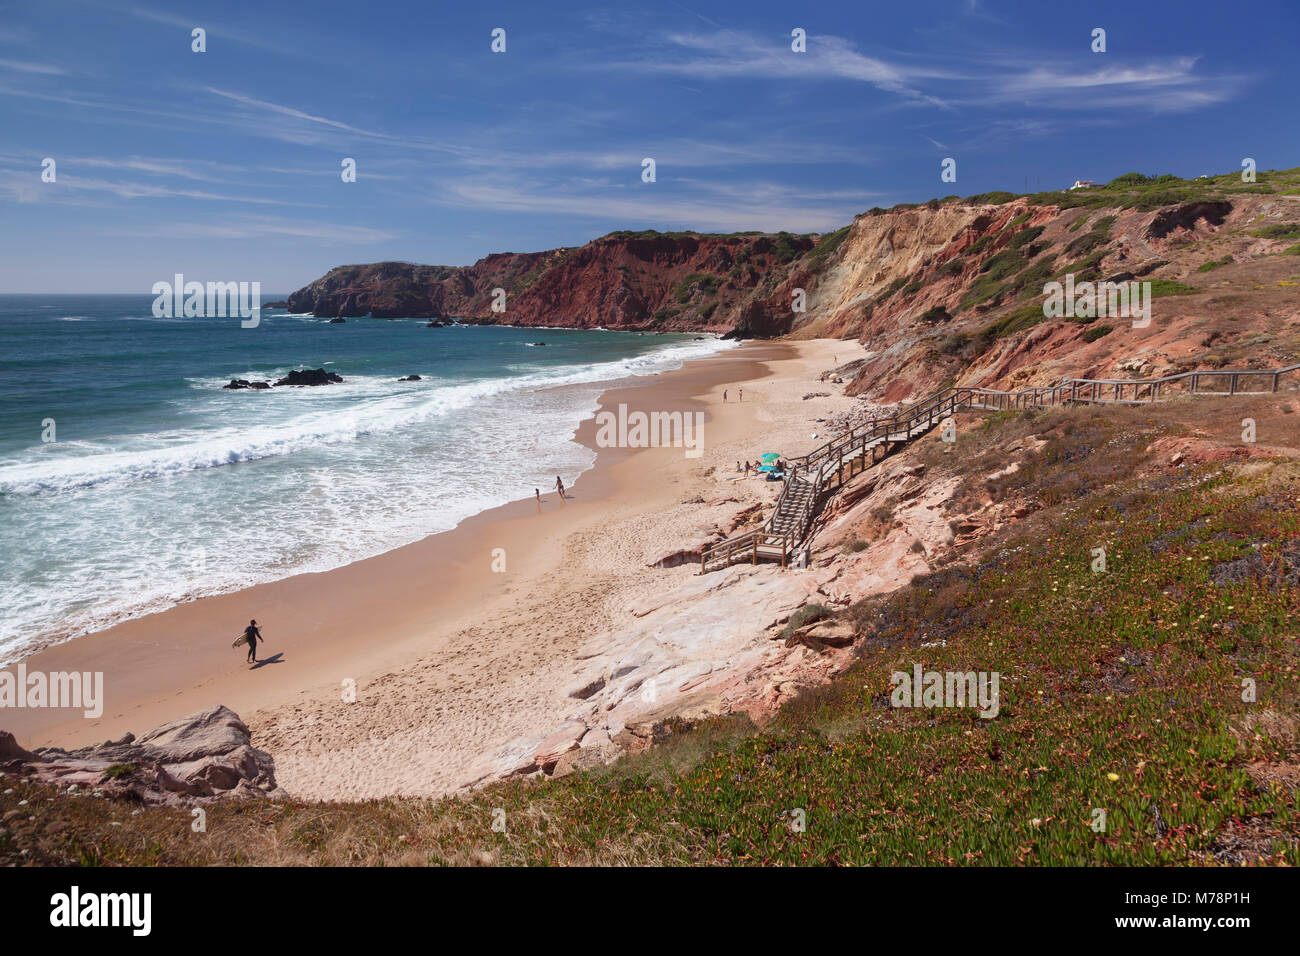 Praia do Amado Beach, Oceano Atlantico, Carrapateira, Costa Vicentina, Algarve, Portogallo, Europa Foto Stock